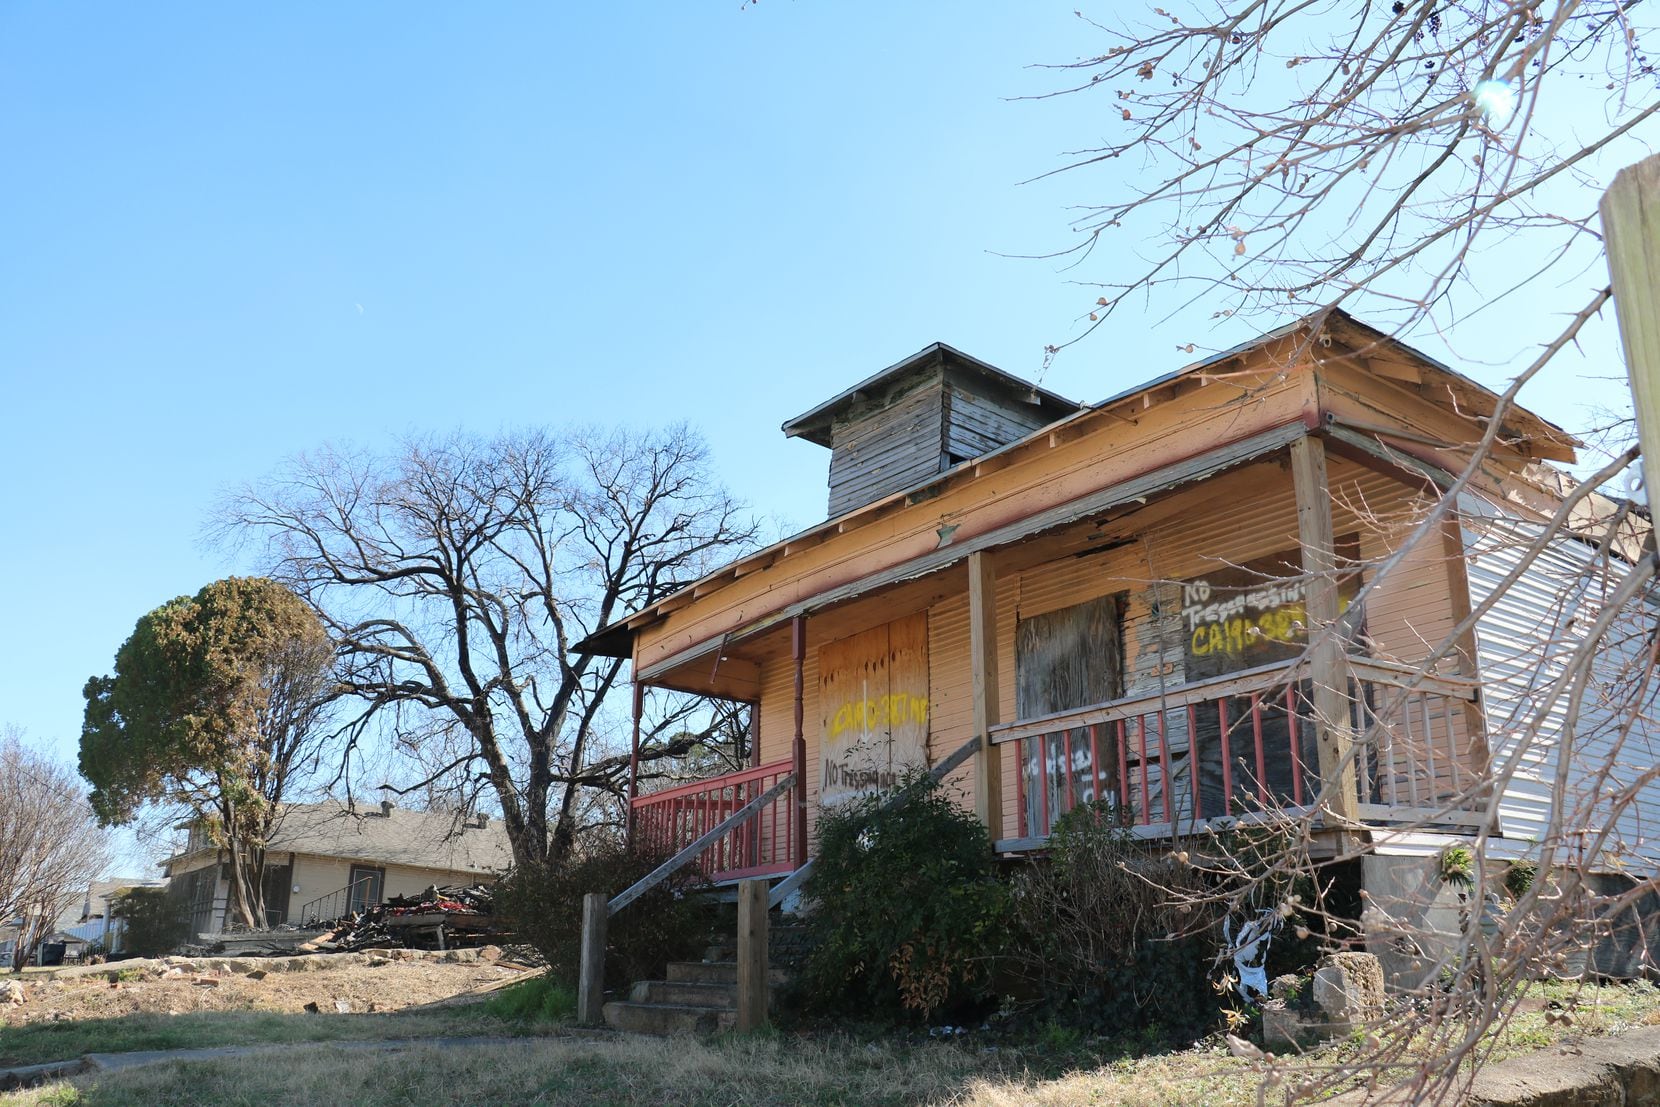 Decenas de casas han sido abandonadas en este barrio histórico de Dallas donde se asentaron...